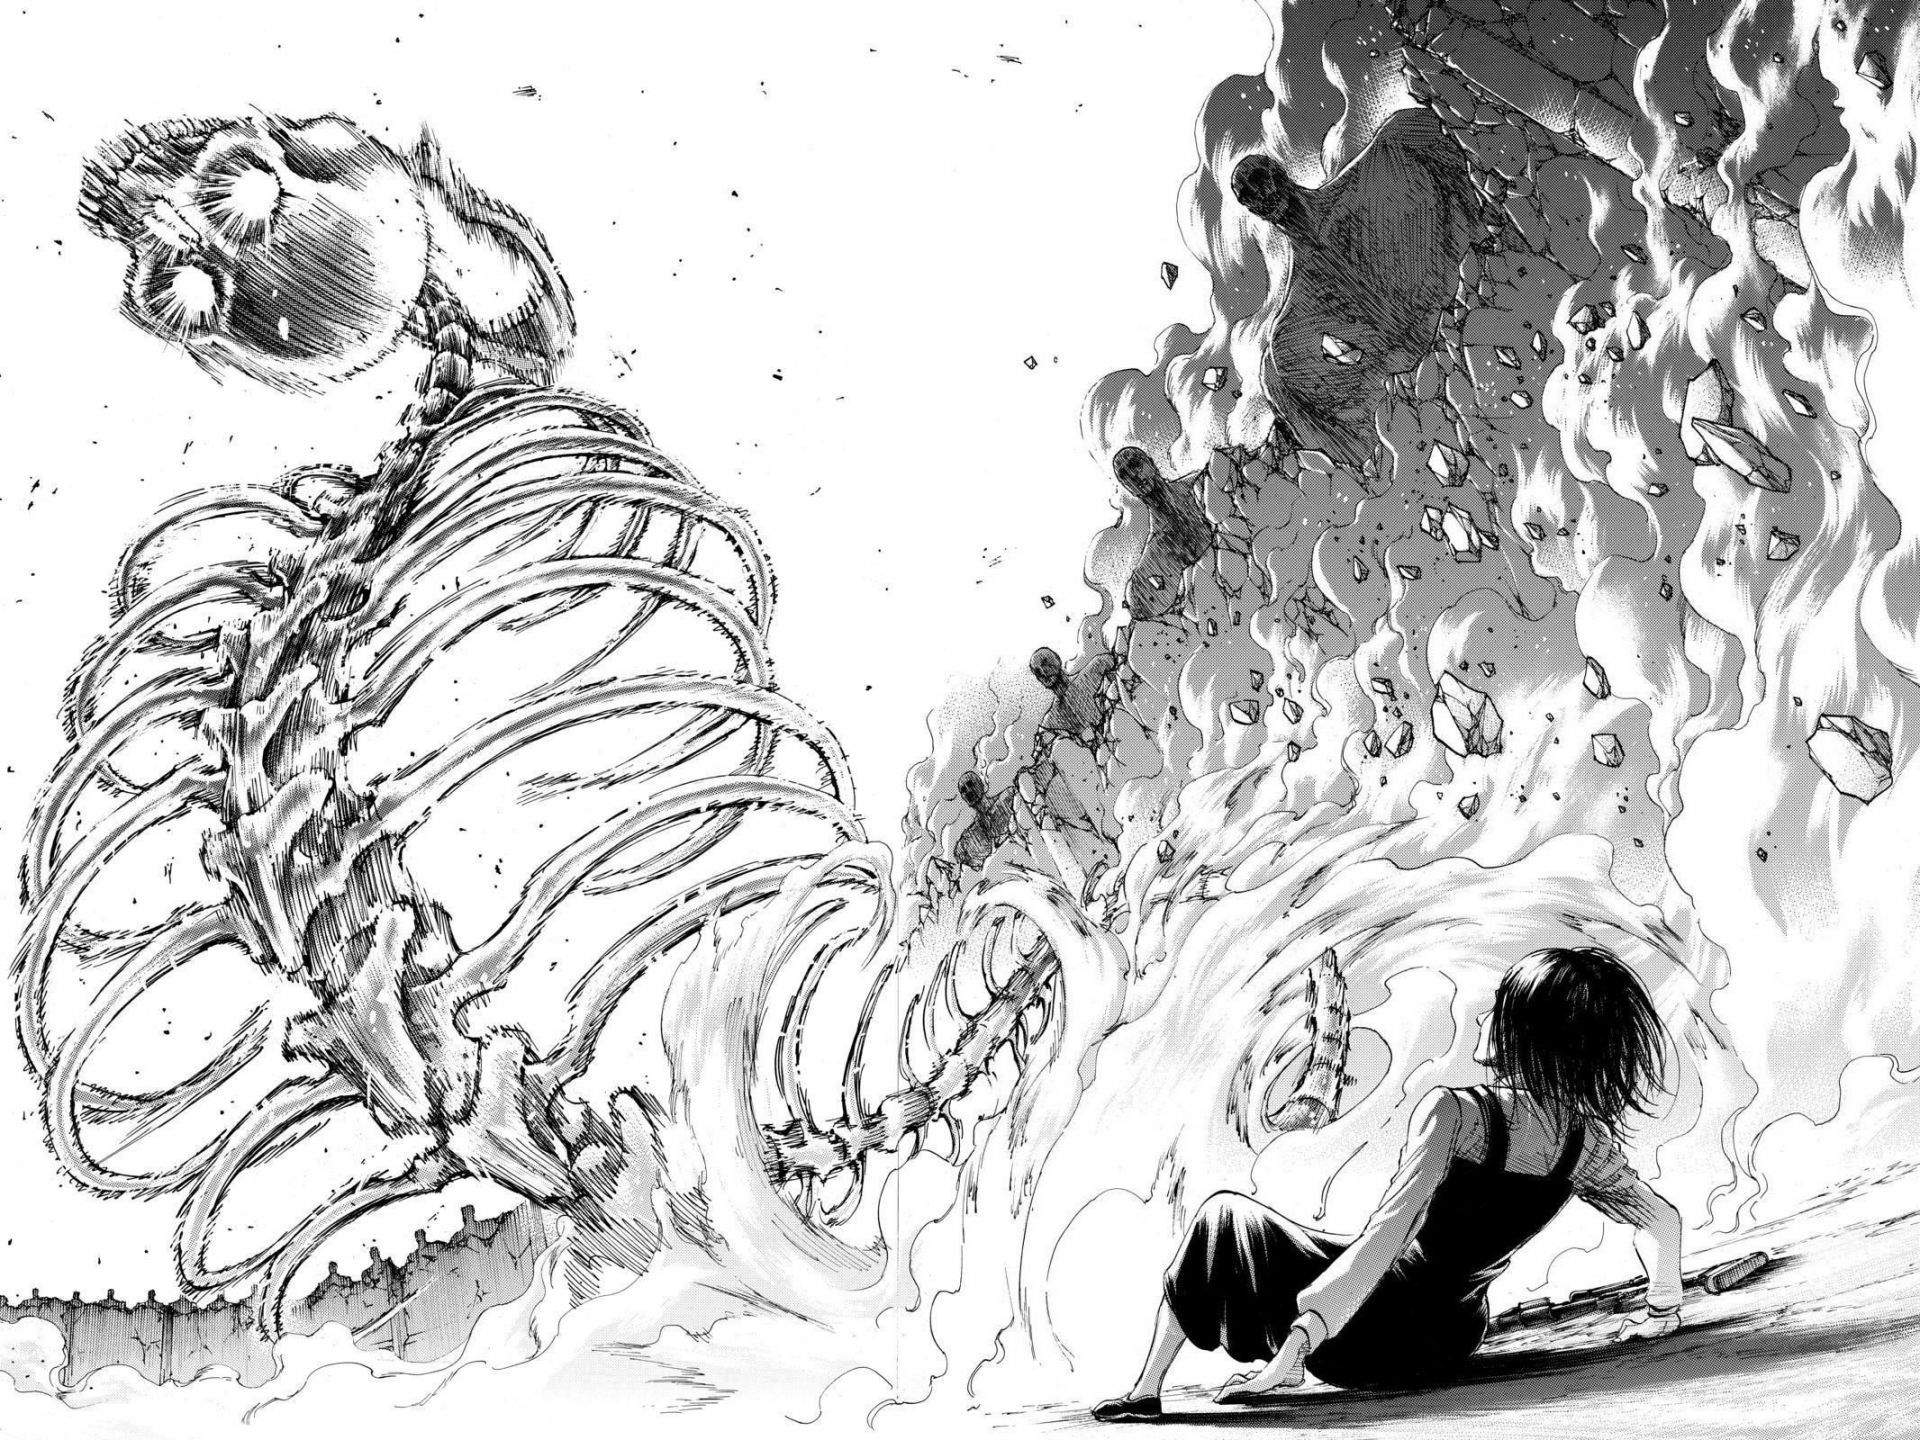 A still from the Attack on Titan manga (Image via Kodansha/Hajime Isayama)